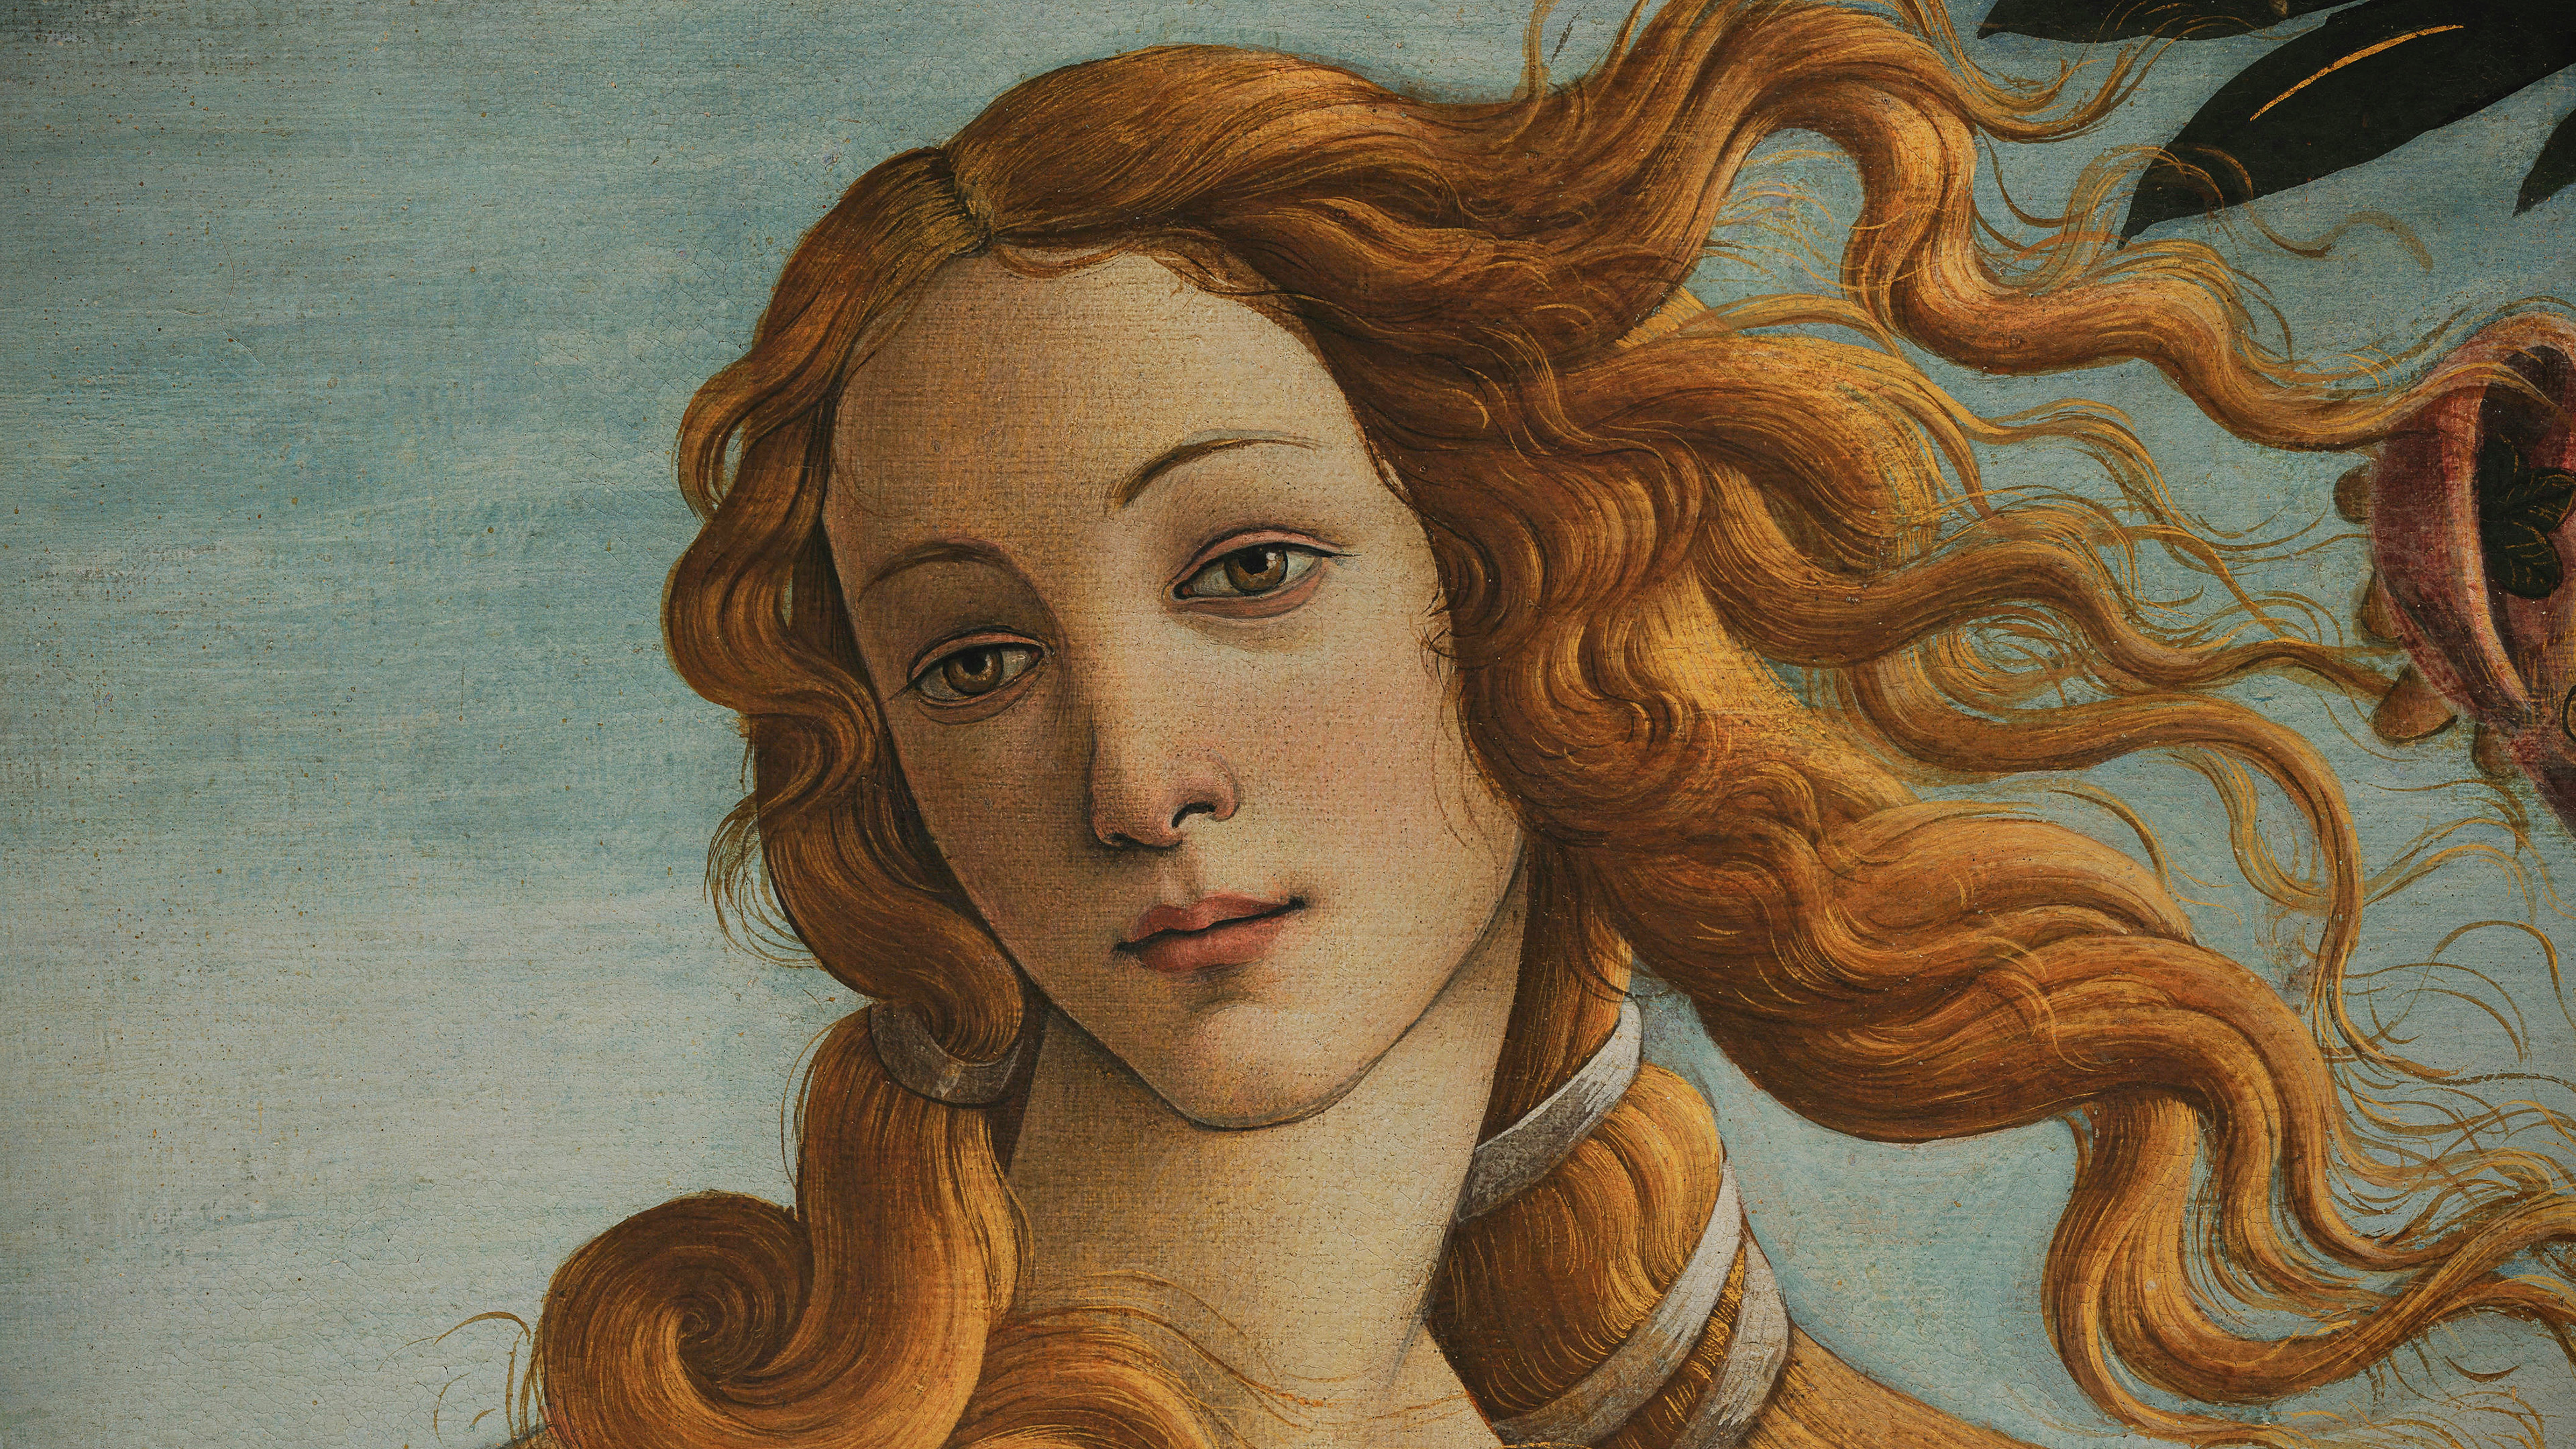 General 3840x2160 Birth of Venus Sandro Botticelli painting oil painting renaissance Aphrodite Greek mythology classic art